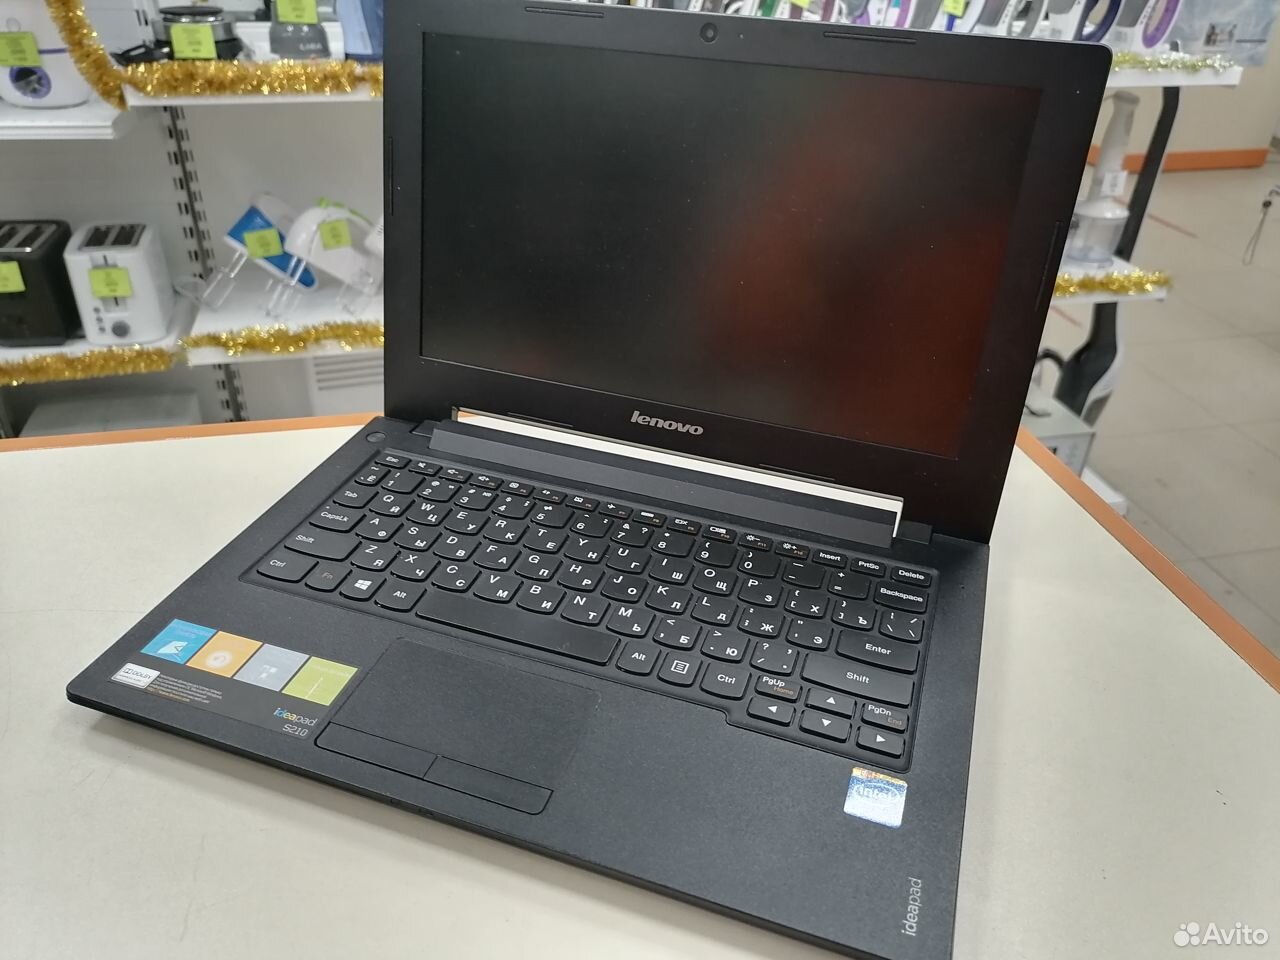 Ноутбук Lenovo 310 (схи) 89275037380 купить 1